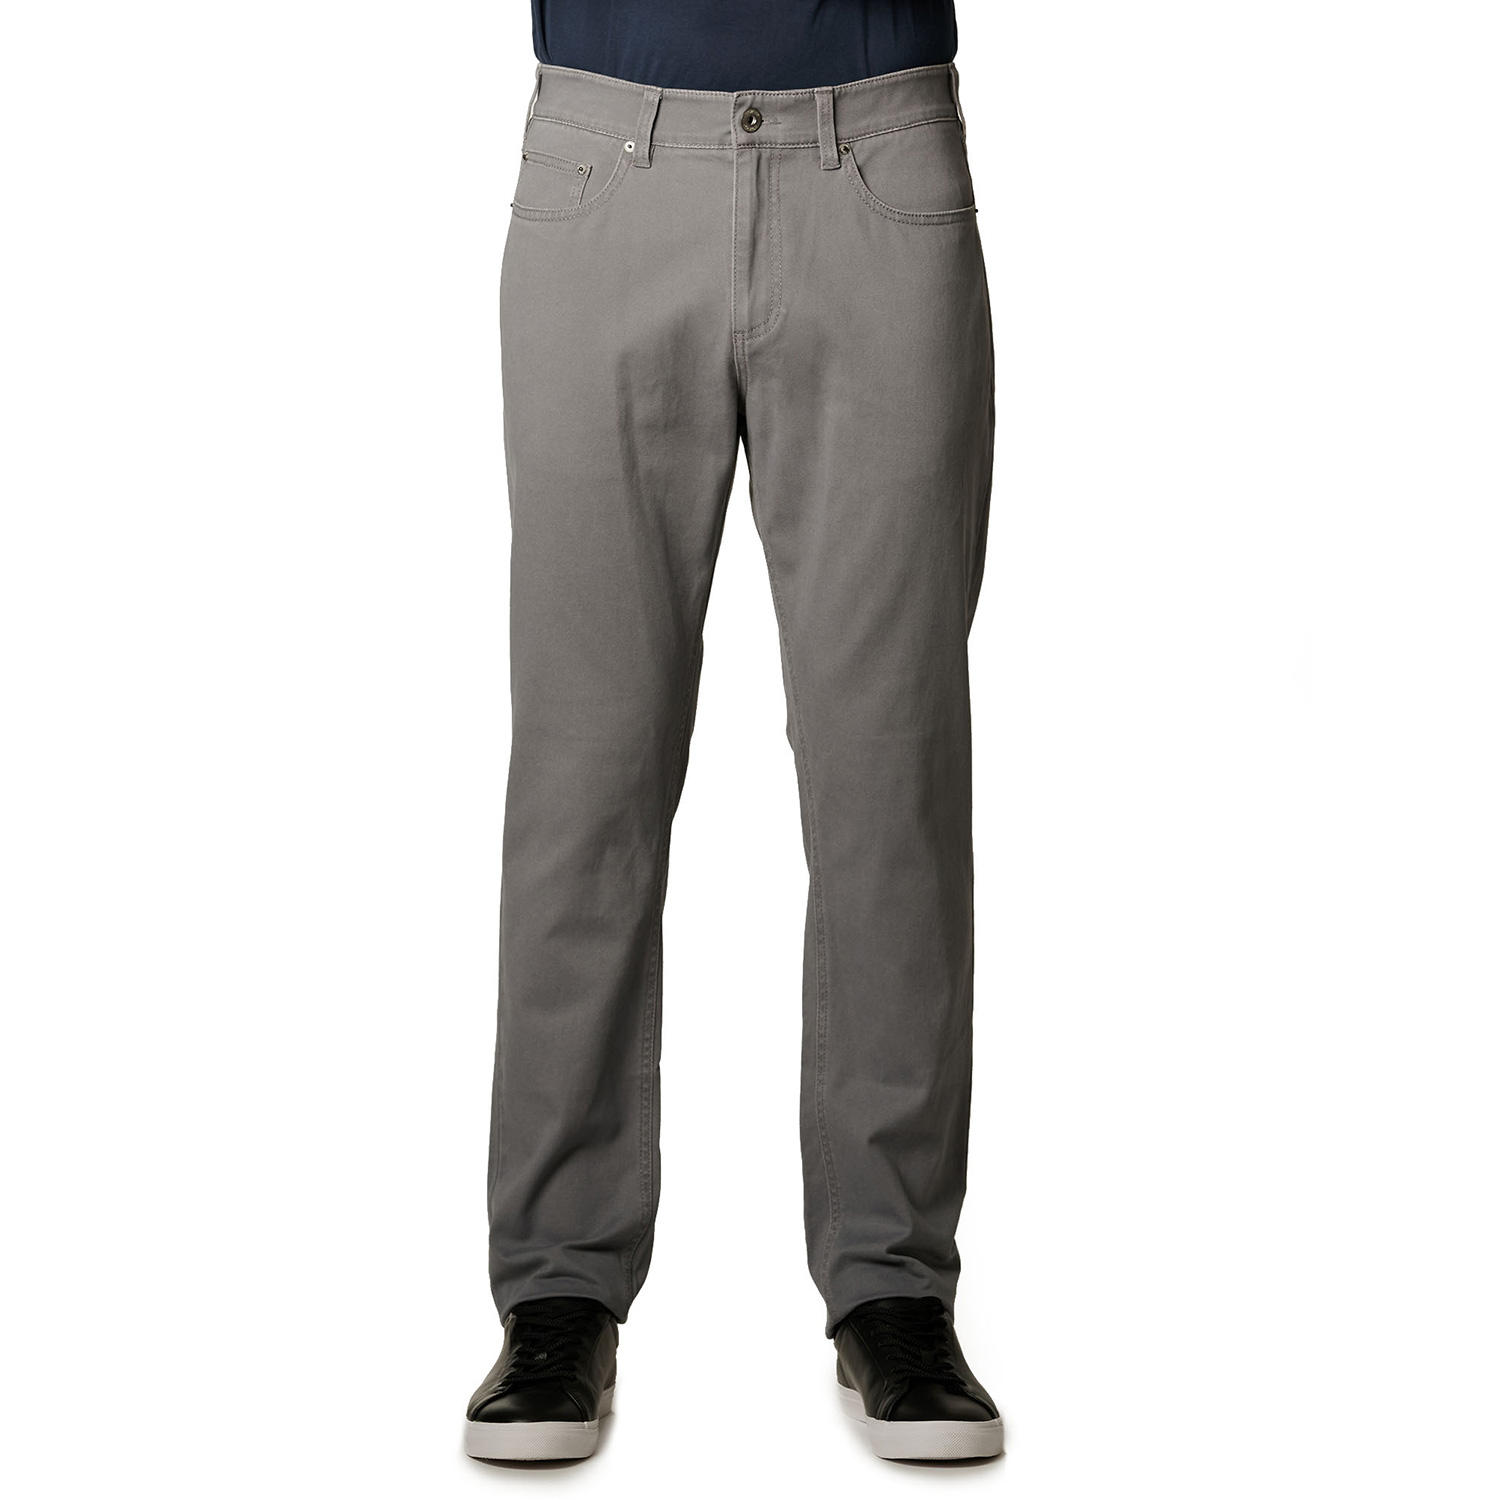 IRON Clothing PATRIOT Comfort Flex Waistband 5 Pocket Stretch Twill Pant - Slate 32x30